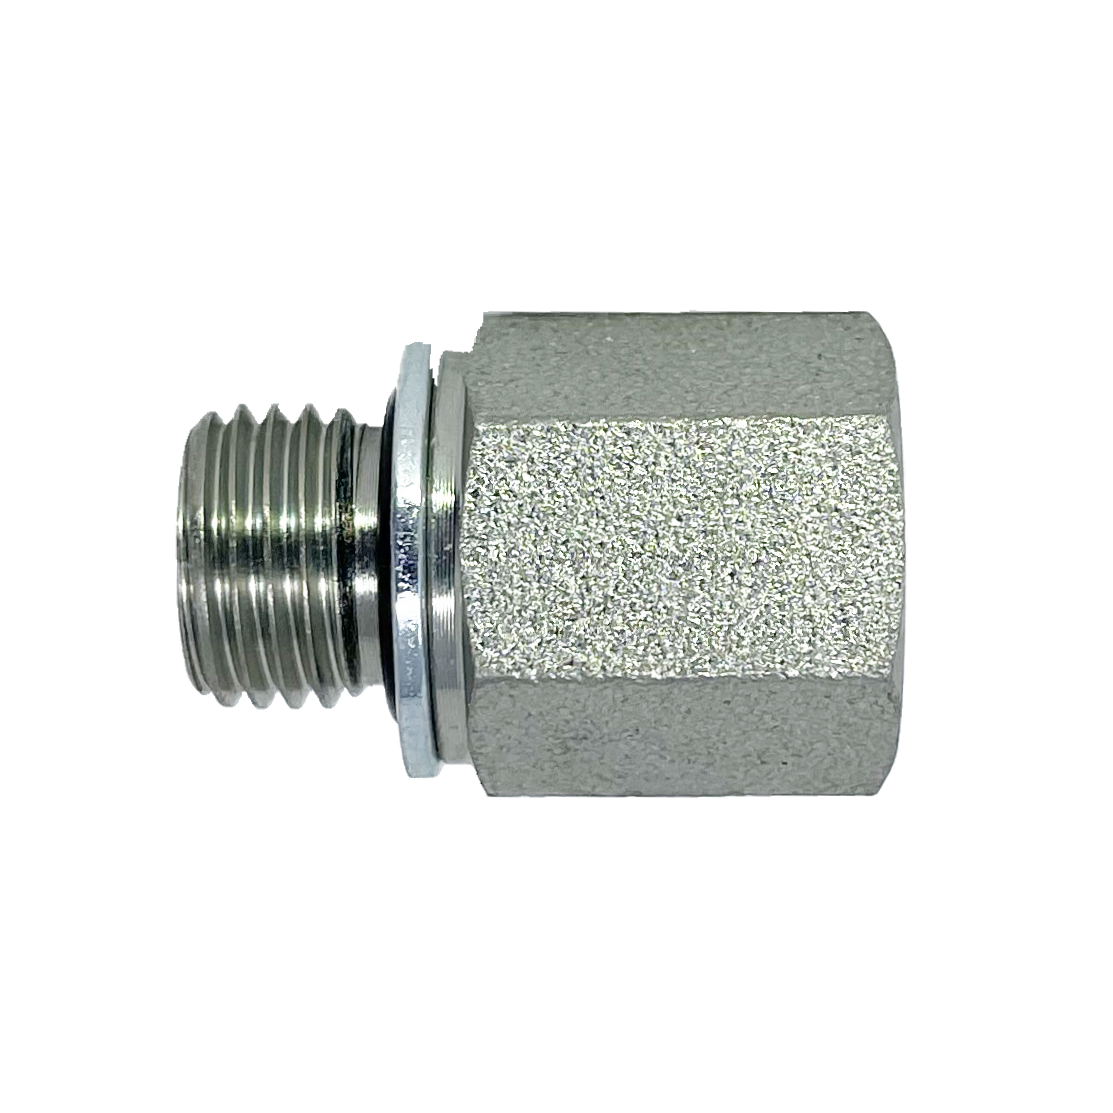 9635S-16-L10-06 : Adaptall Straight Adapter, Male L10 DIN Tube x Female 0.375 (3/8") NPT, Carbon Steel